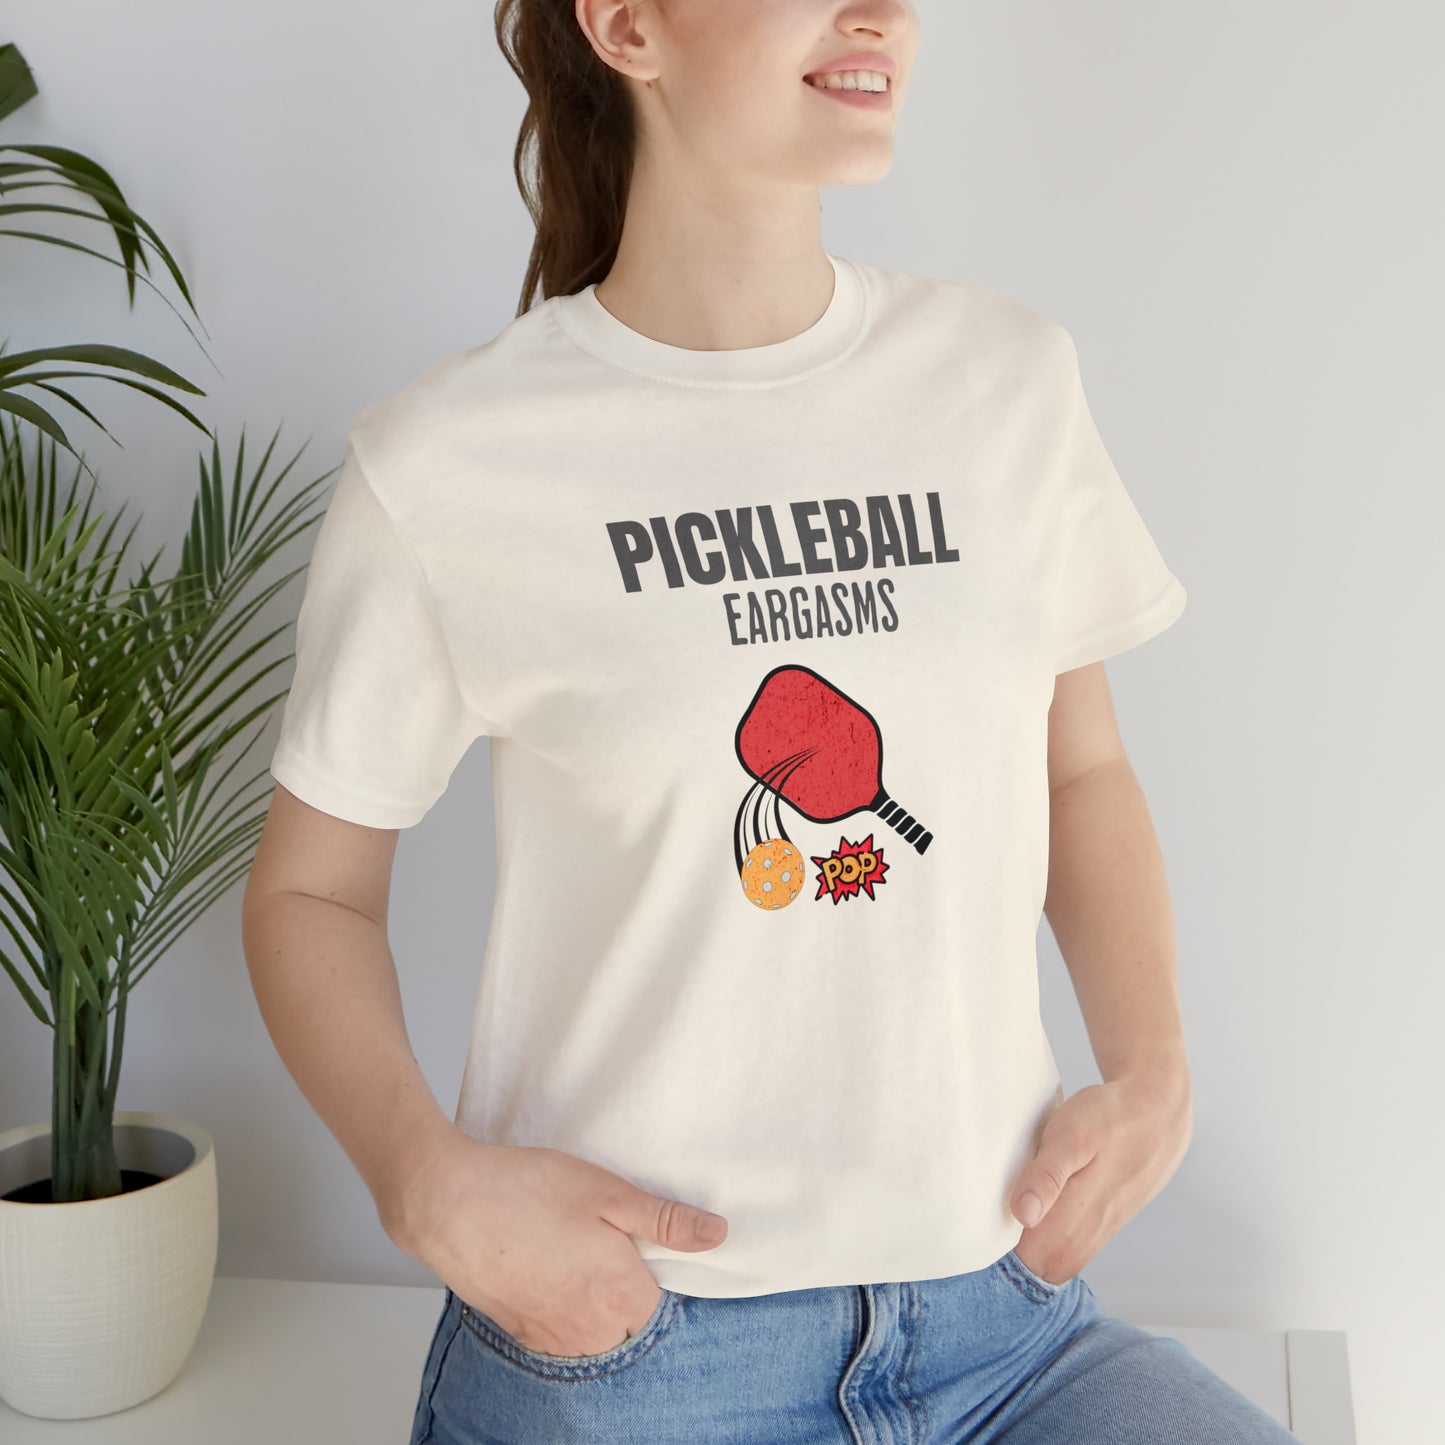 Pickleball Eargasms T-Shirt